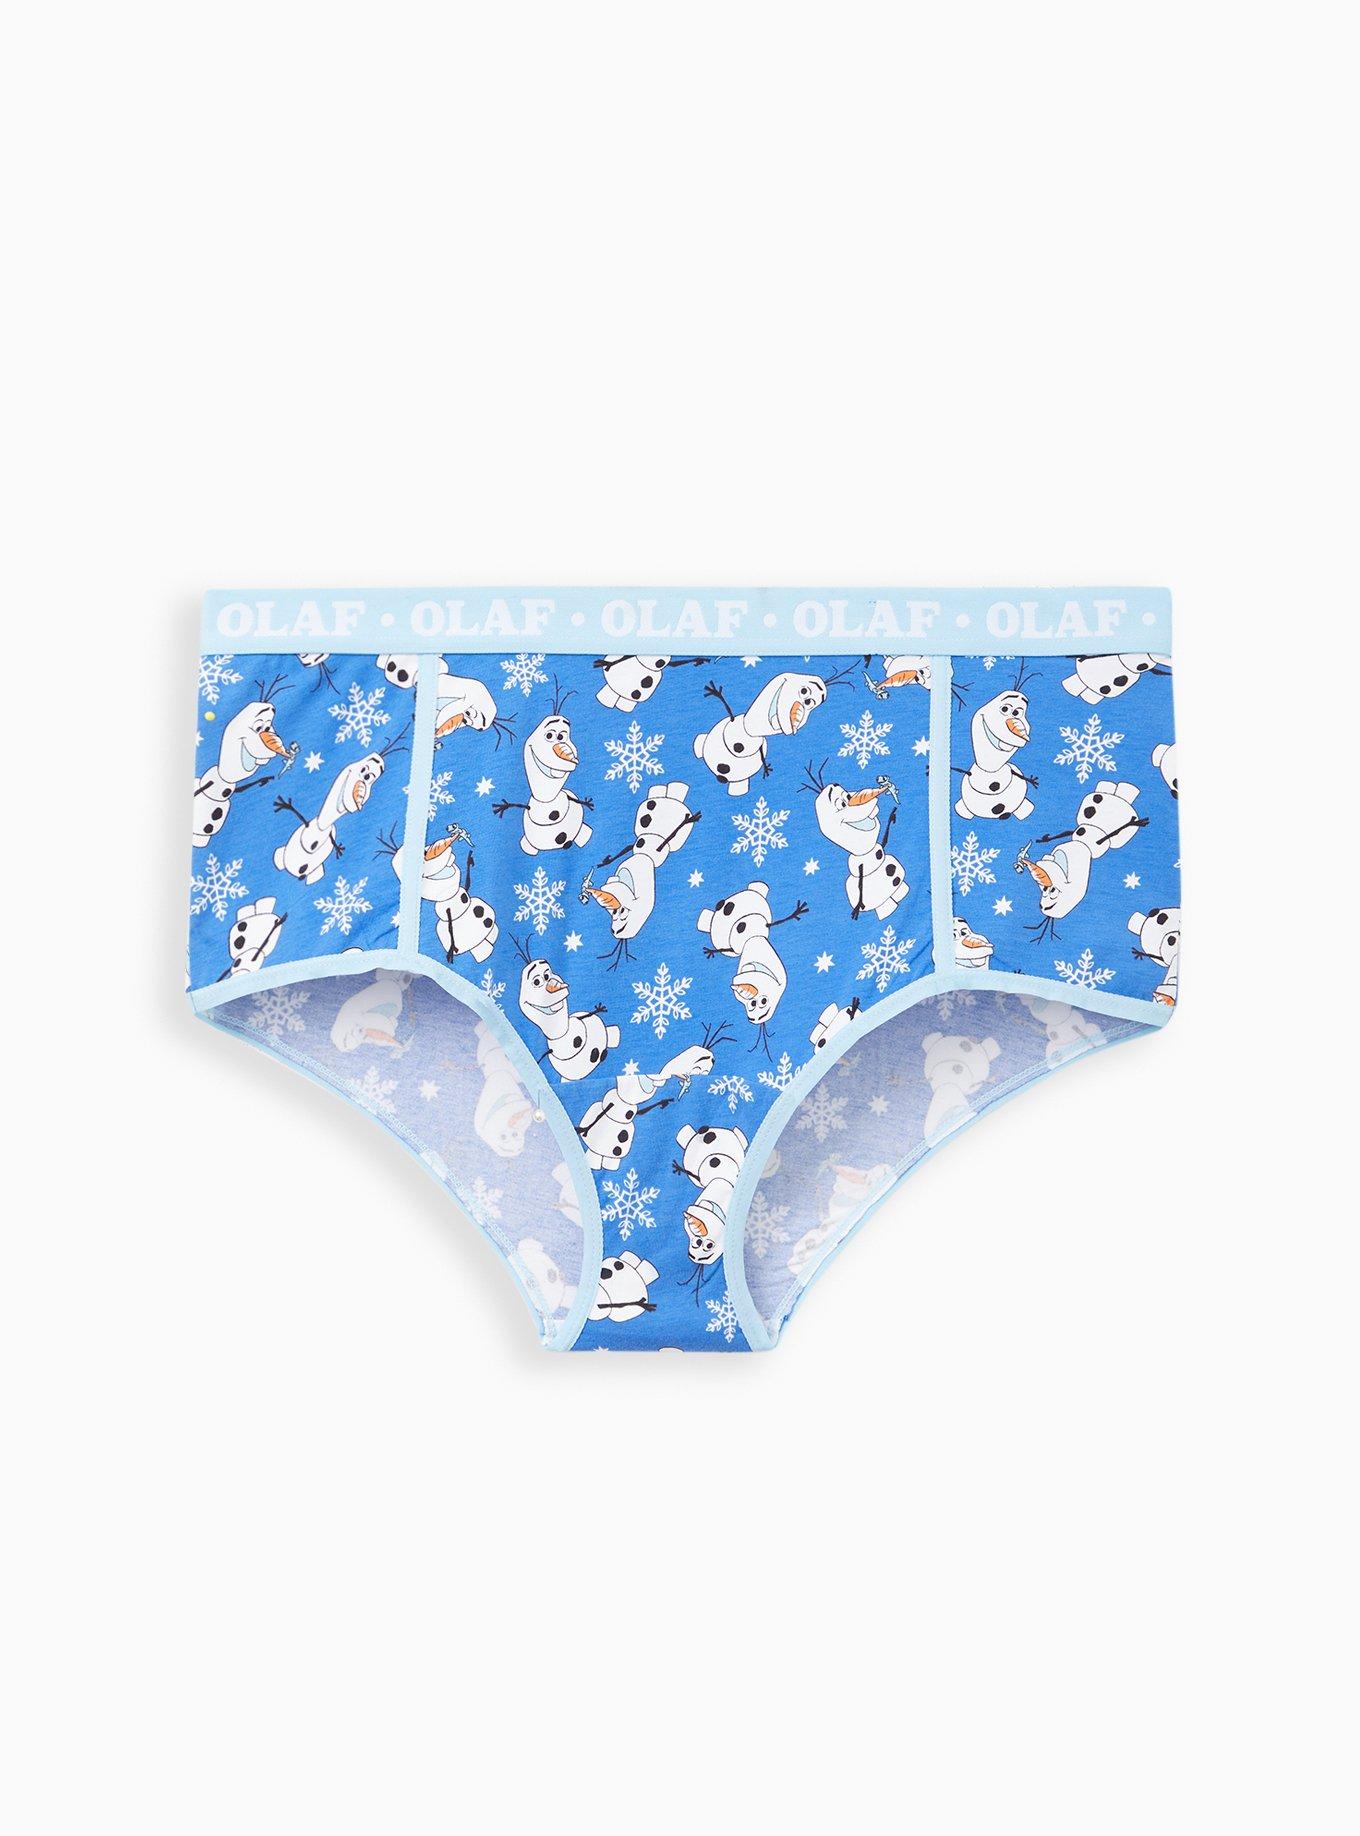 Plus Size - Walt Disney Frozen Boyshort Panty - Cotton Olaf Blue